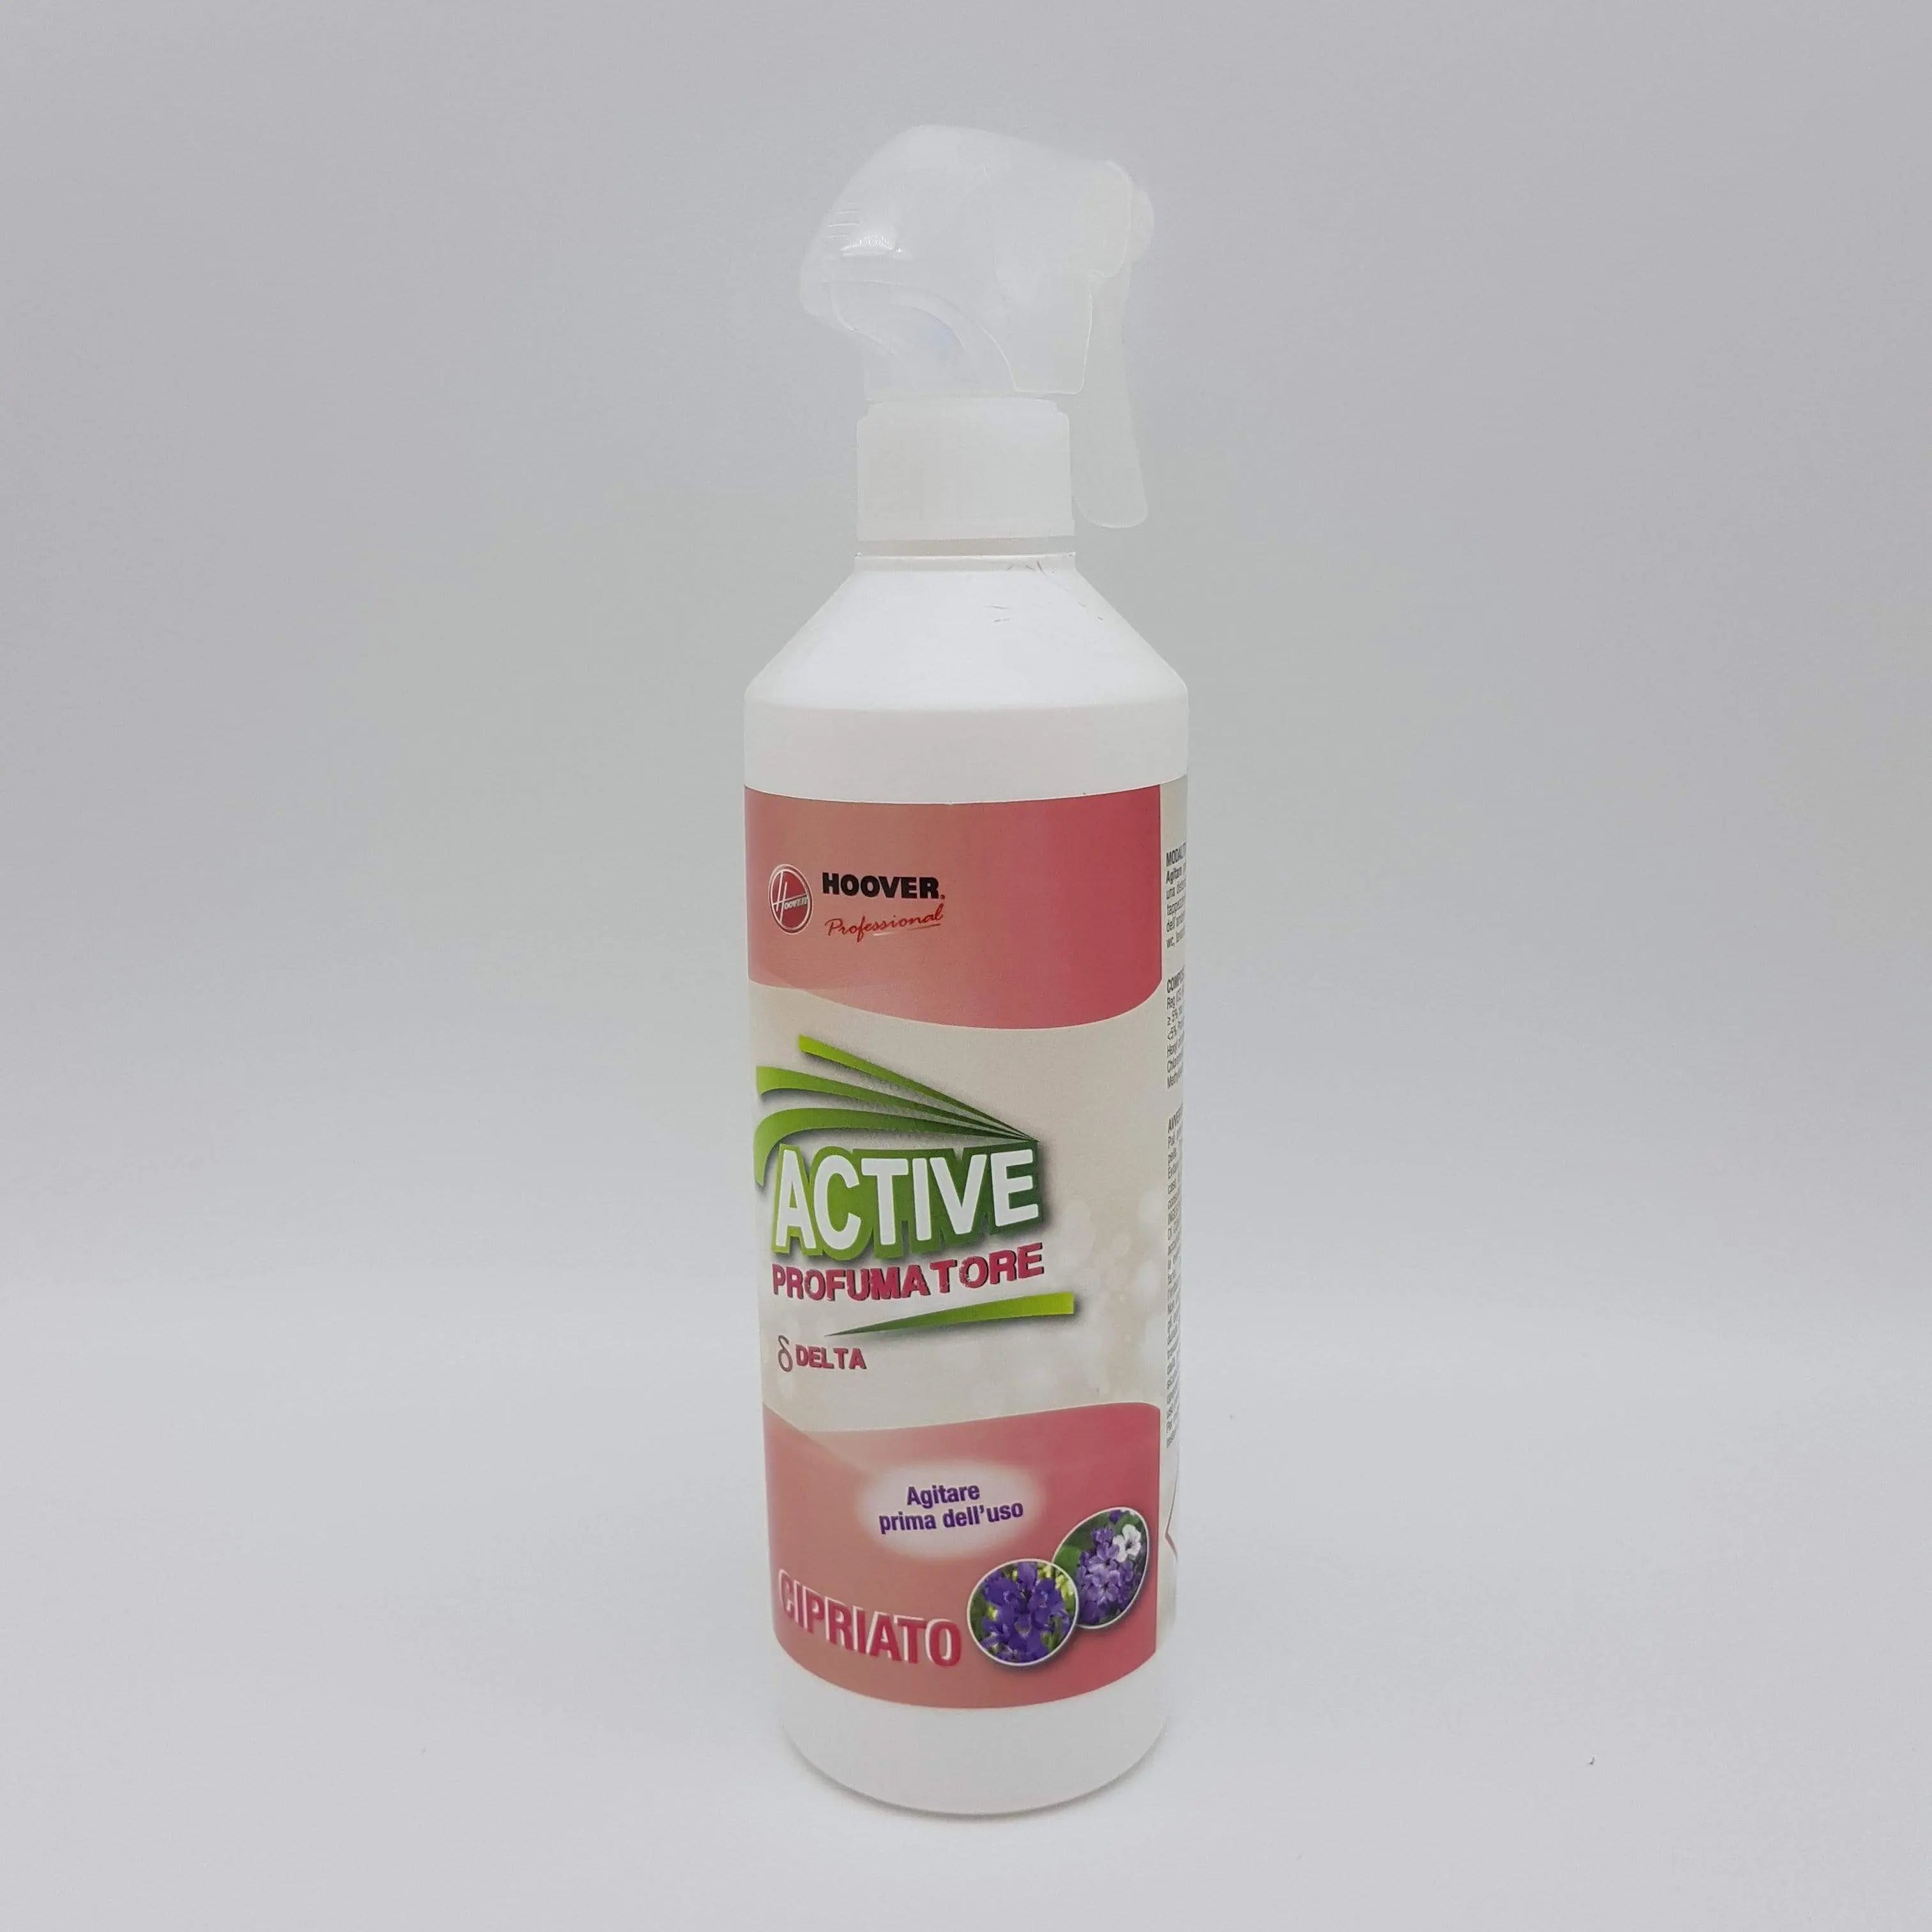 Profumatore spray active delta cipriato  600ml HOOVER